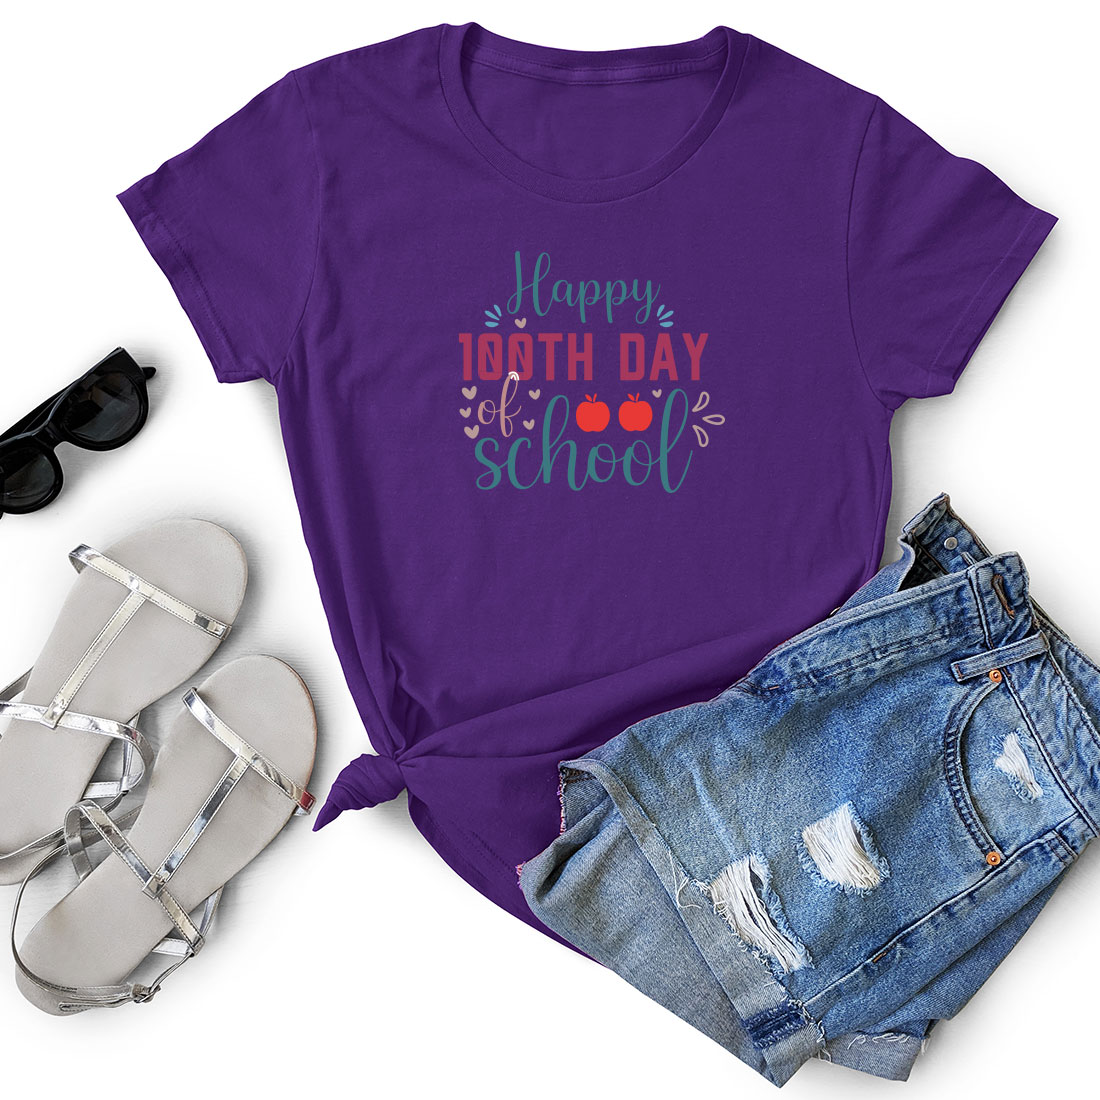 Purple shirt with the words happy birthday school on it.